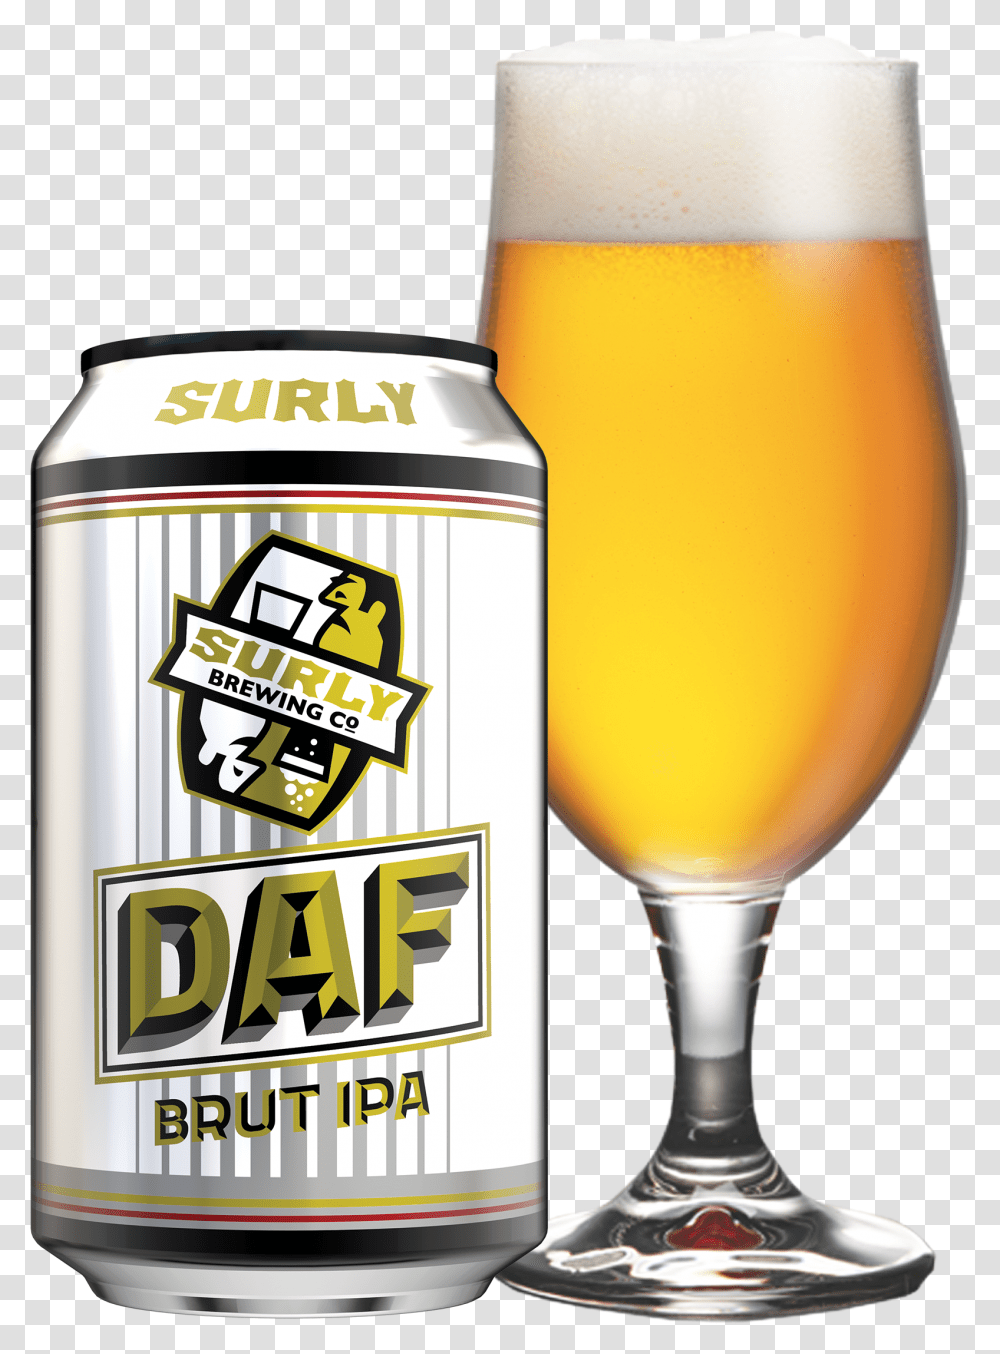 Surly Daf Brut Ipa Surly Brewing, Glass, Beer, Alcohol, Beverage Transparent Png